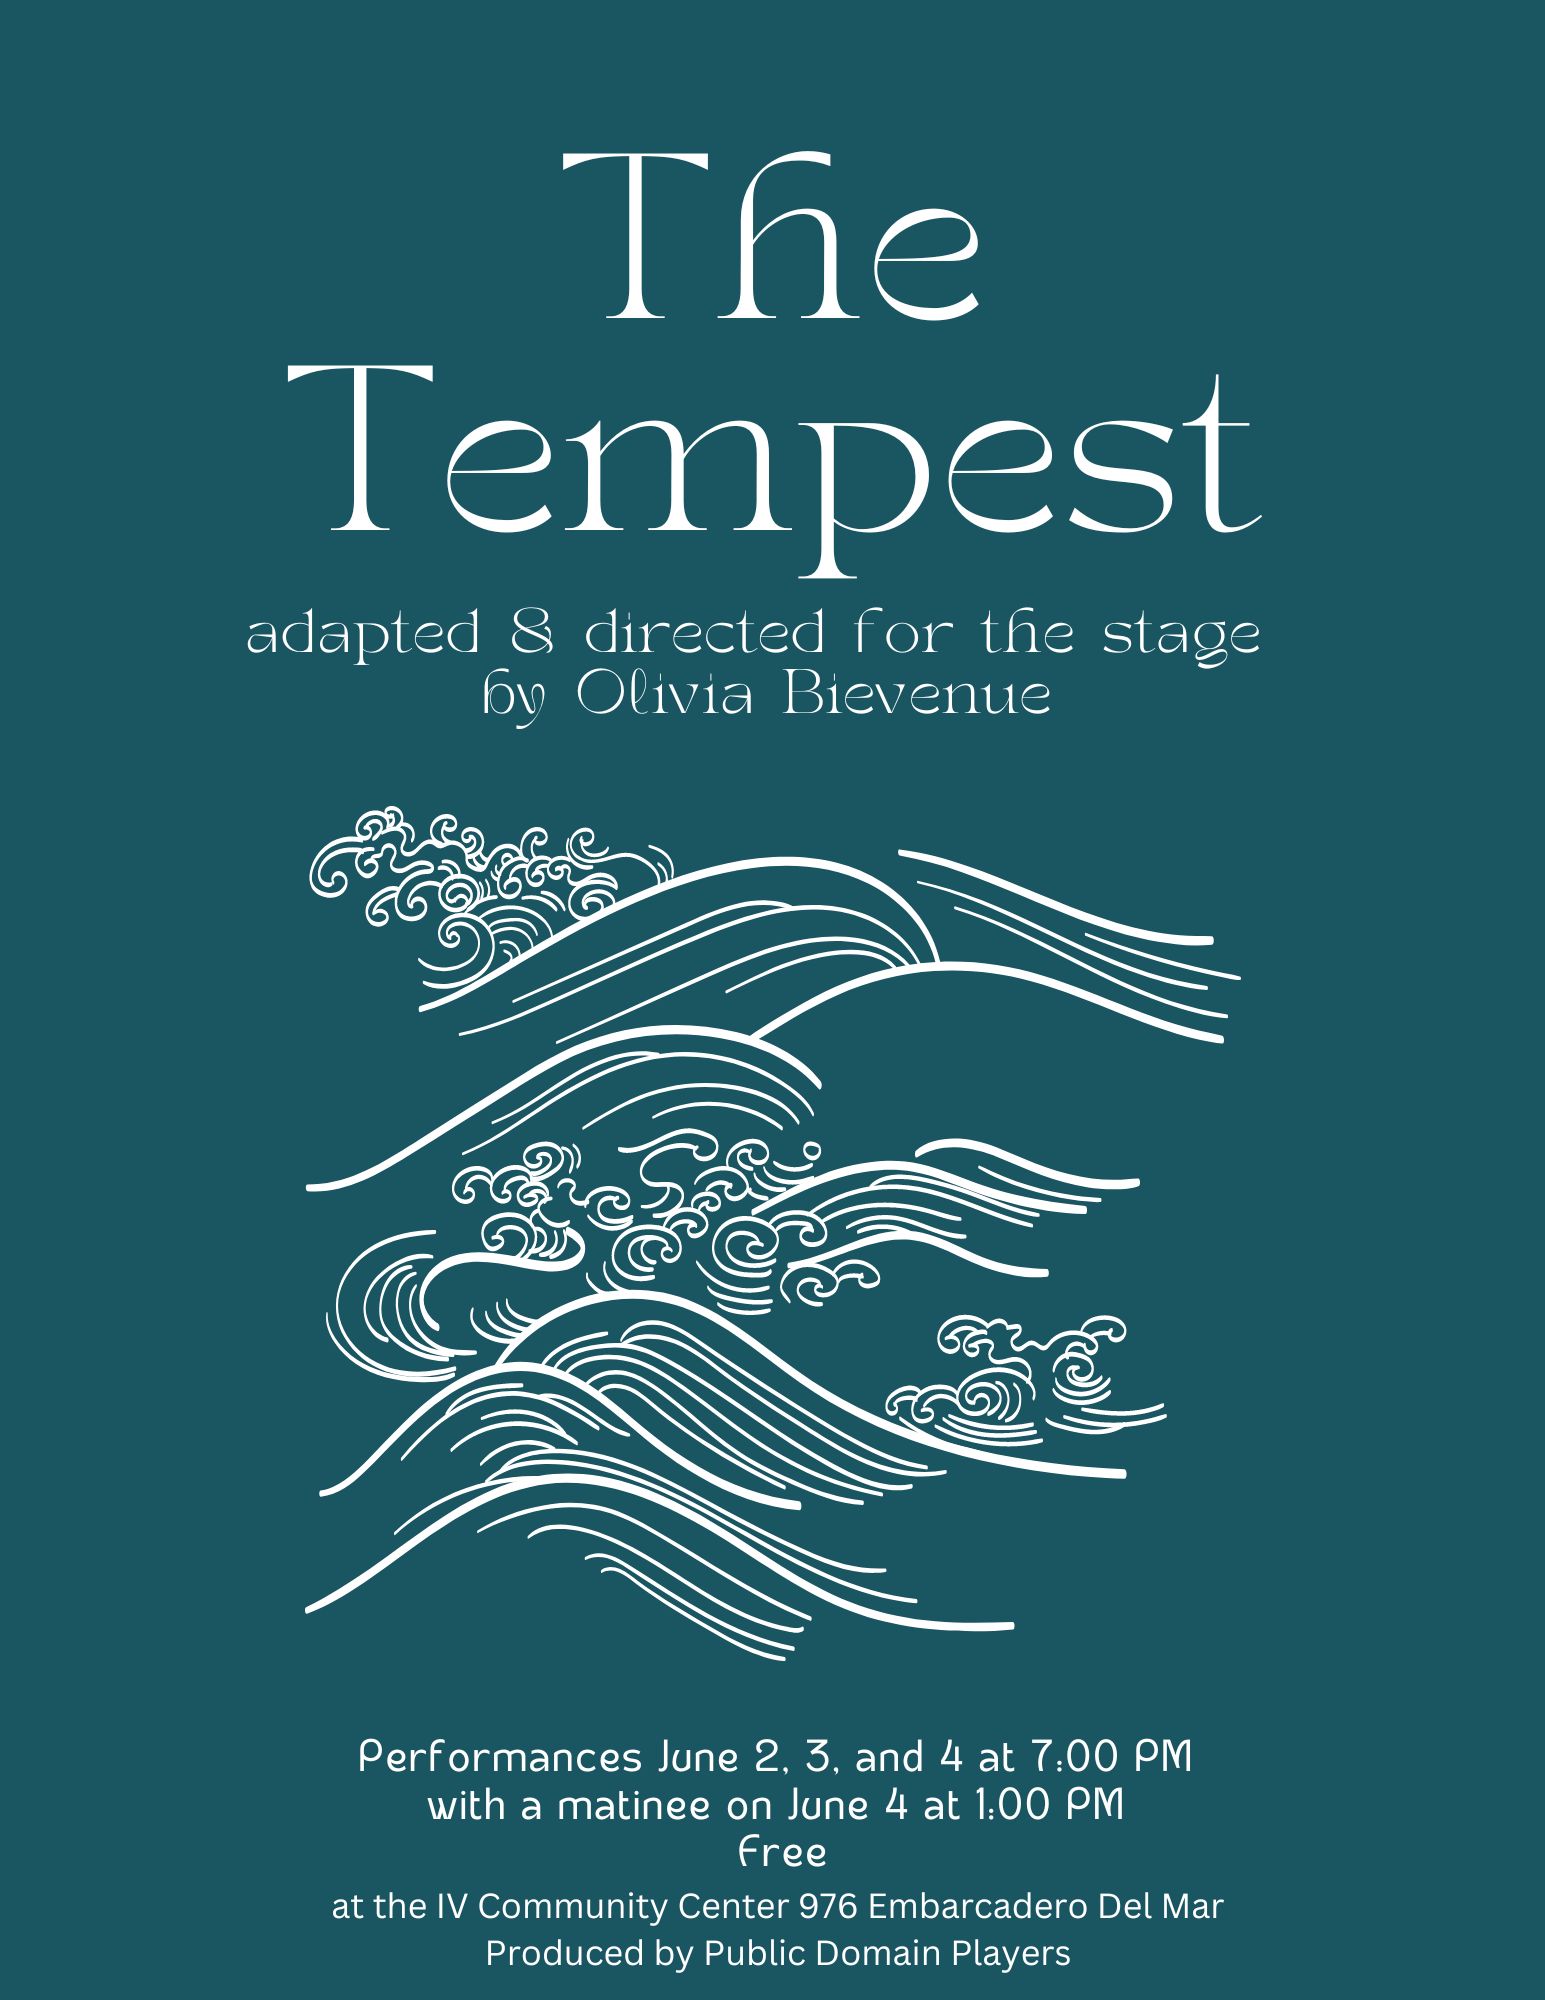 Public Domain Players present: The Tempest